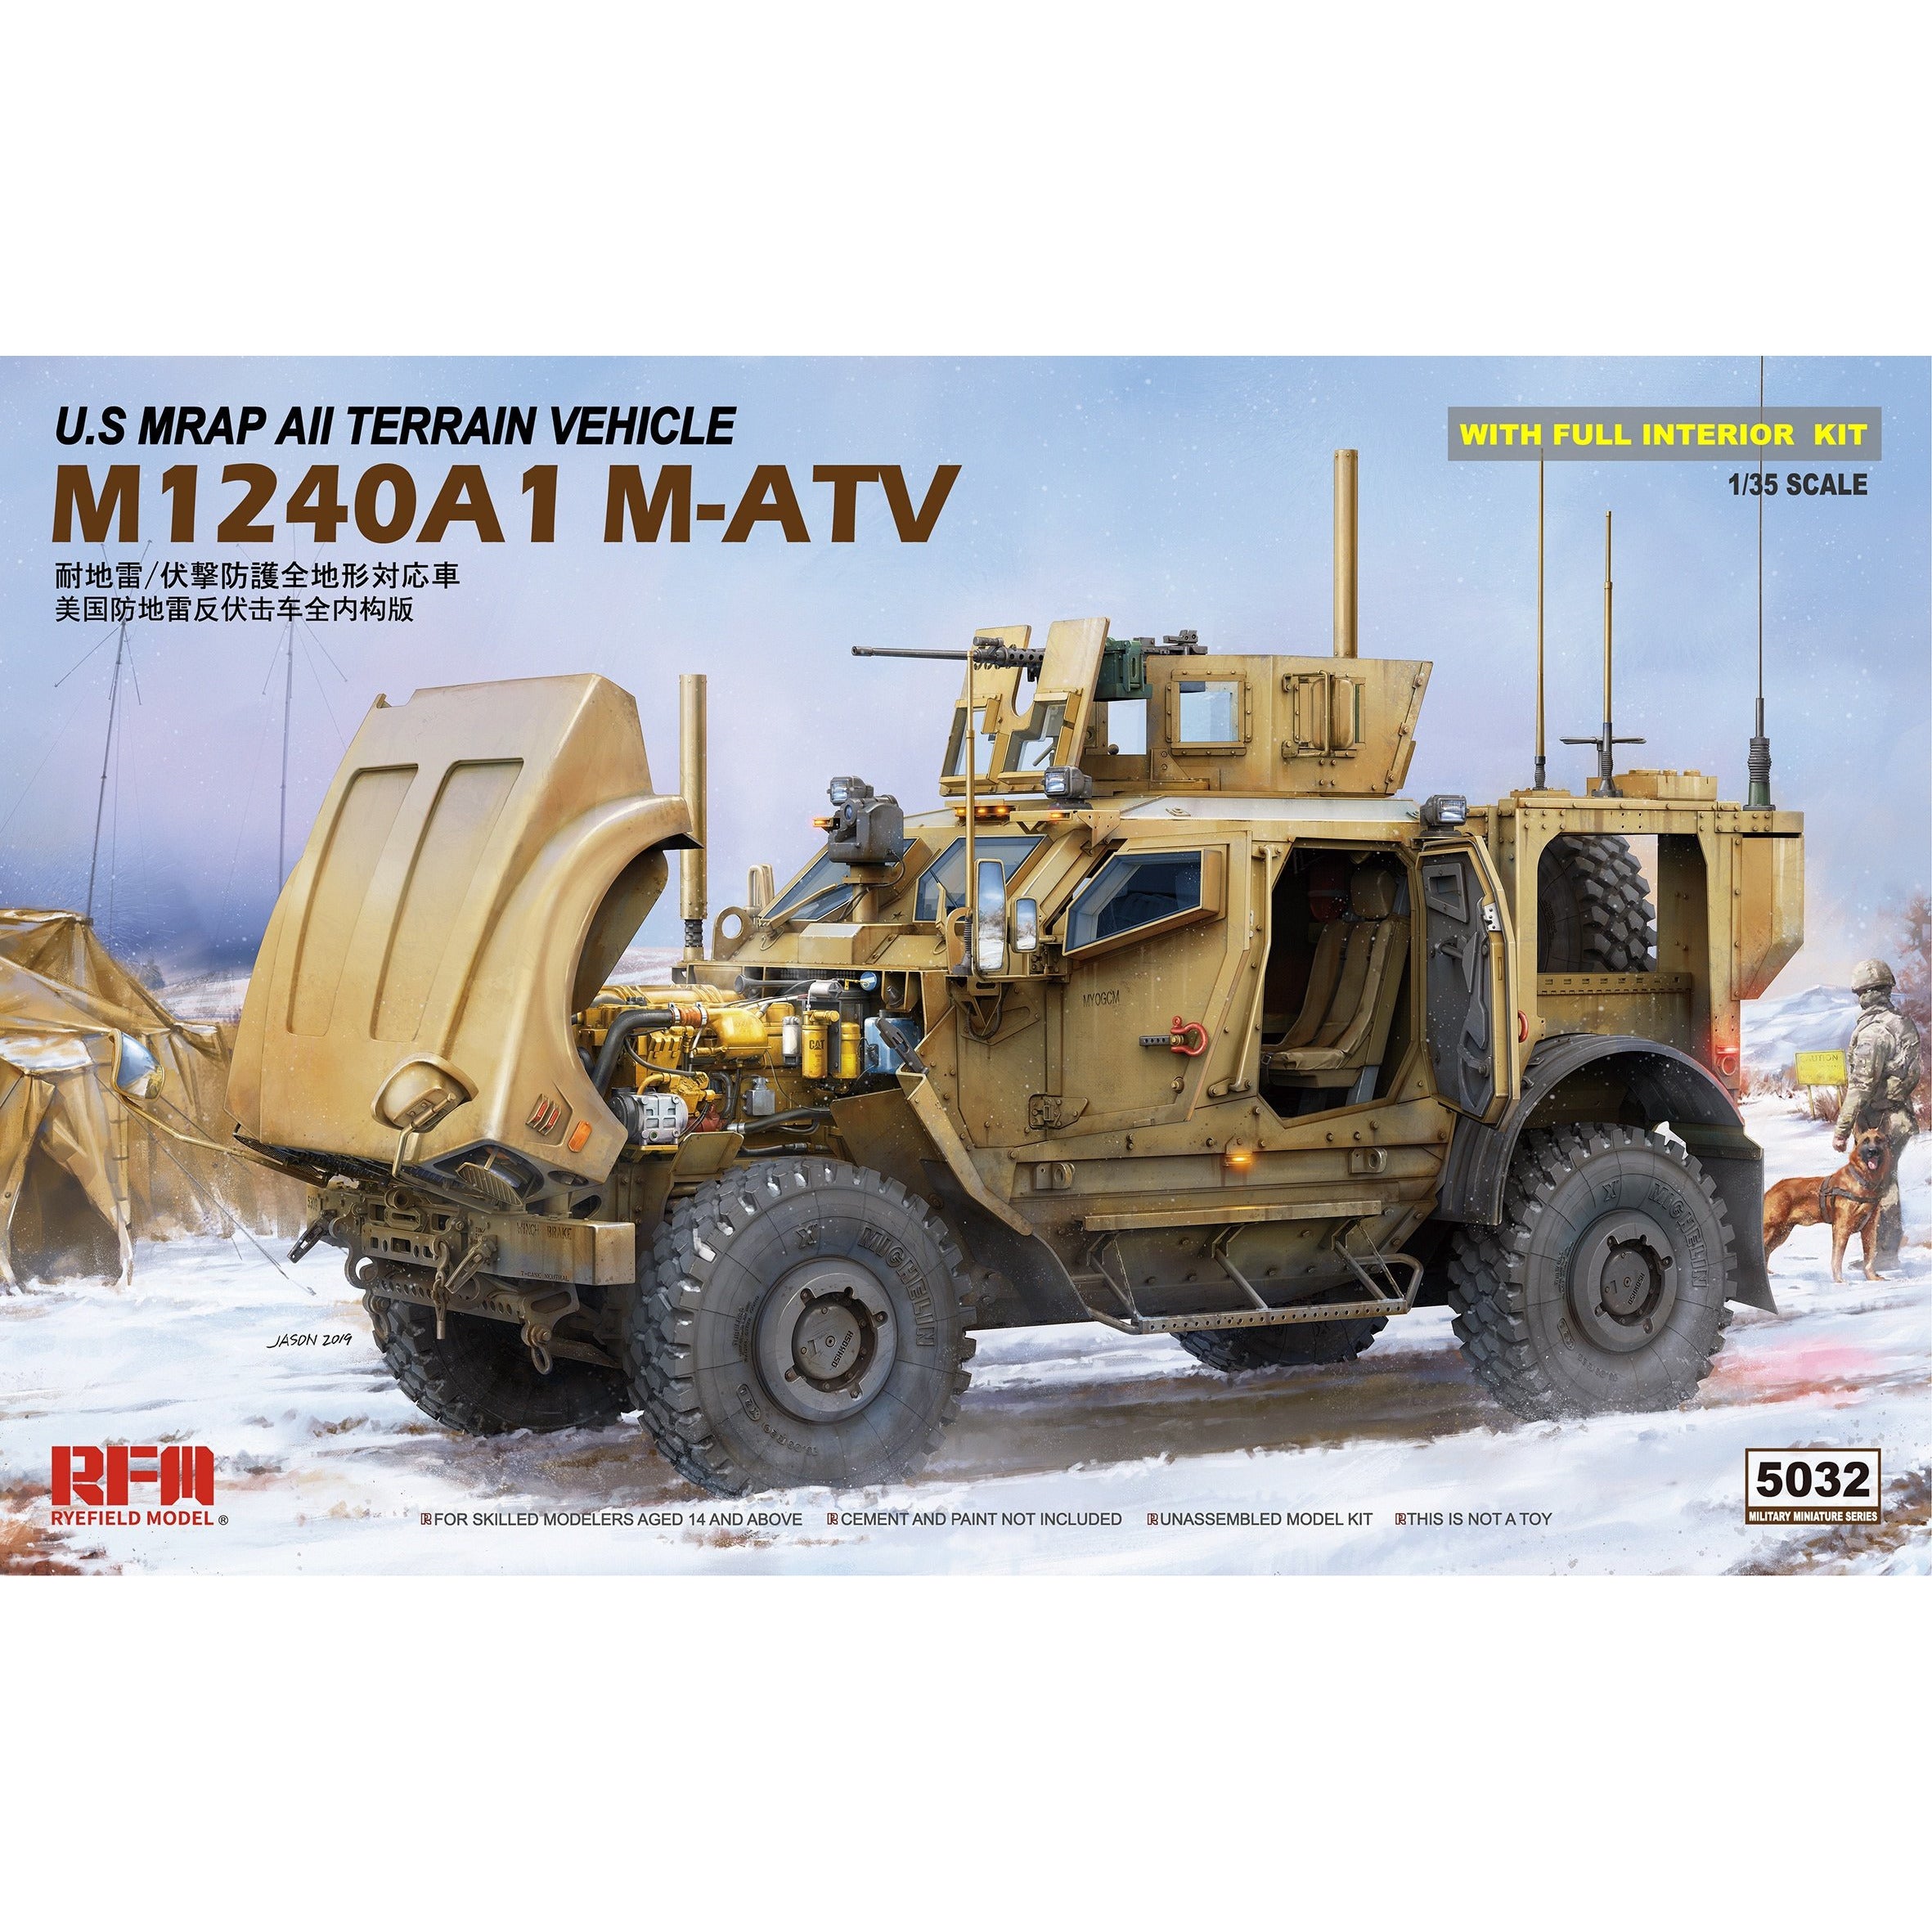 M1240A1 M-ATV 1/35 #5032 by Ryefield Model